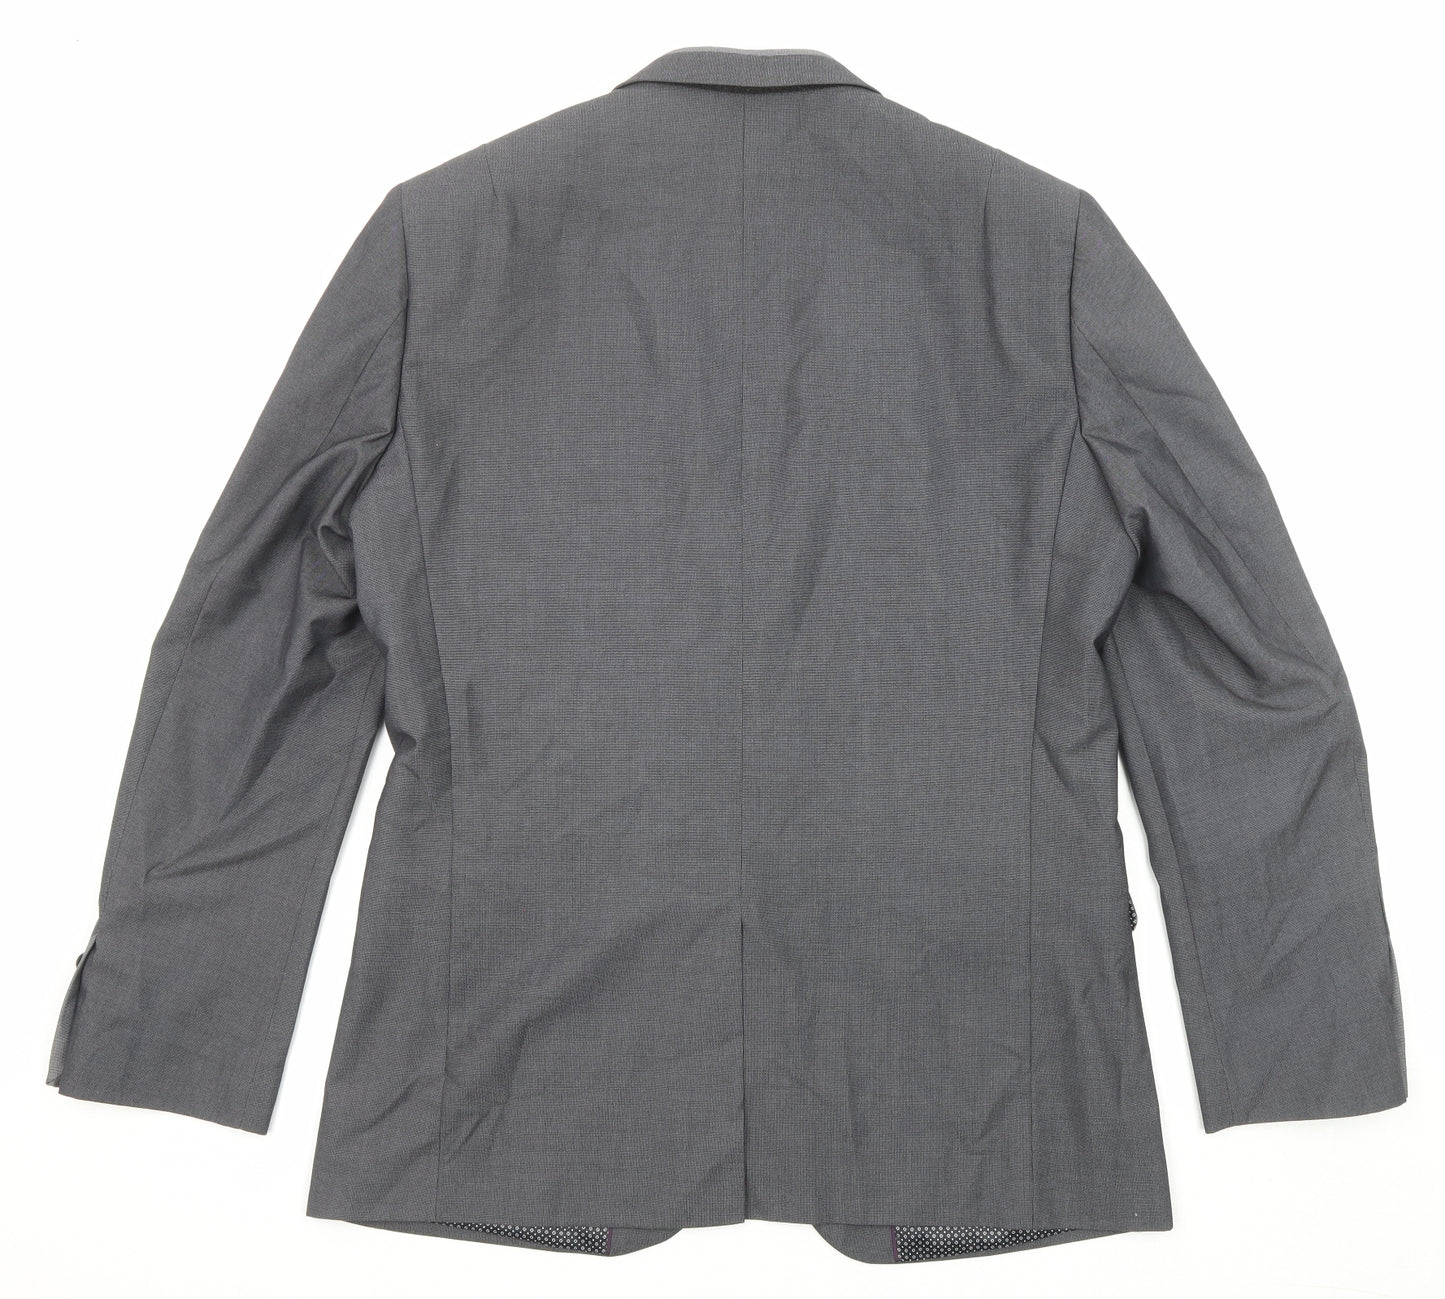 Slaters Mens Grey Polyester Jacket Suit Jacket Size 42 Regular